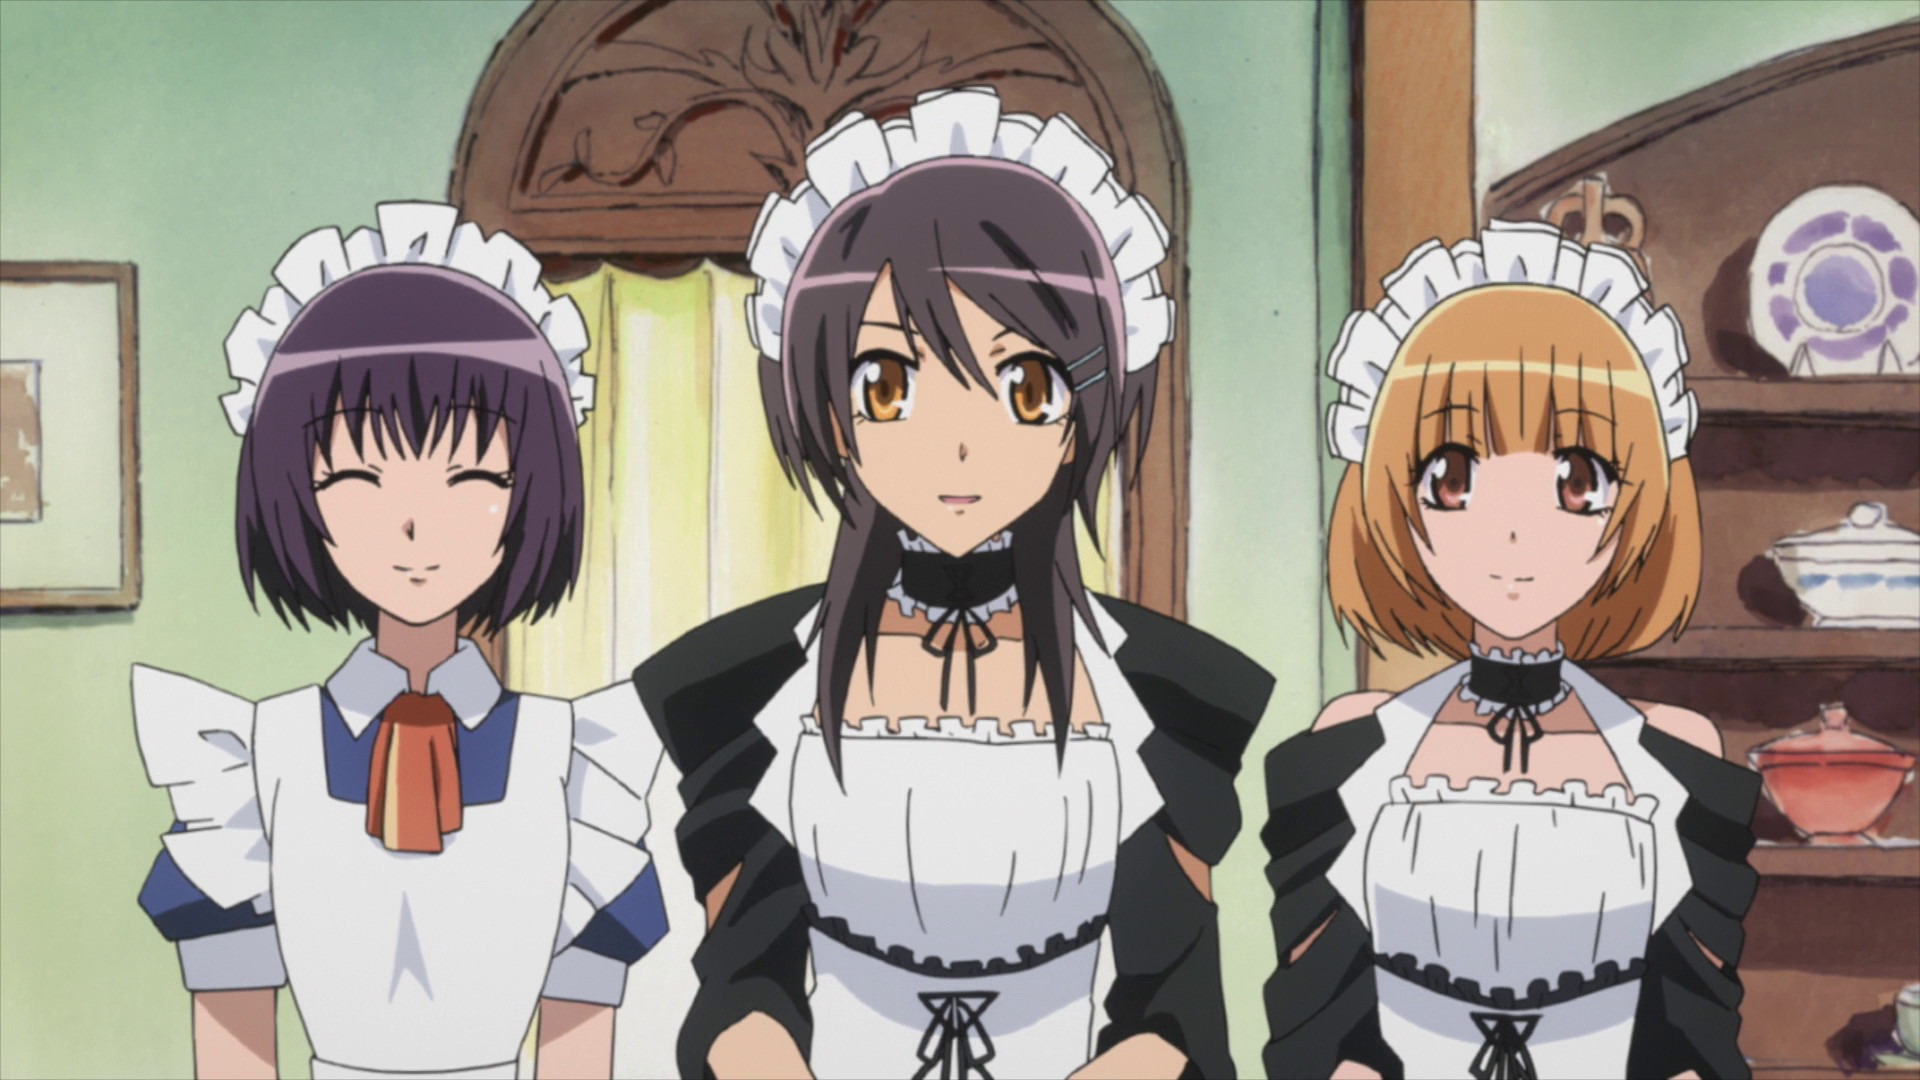 1920x1080 When I think about maids, 'Kaichou wa maid sama' ...